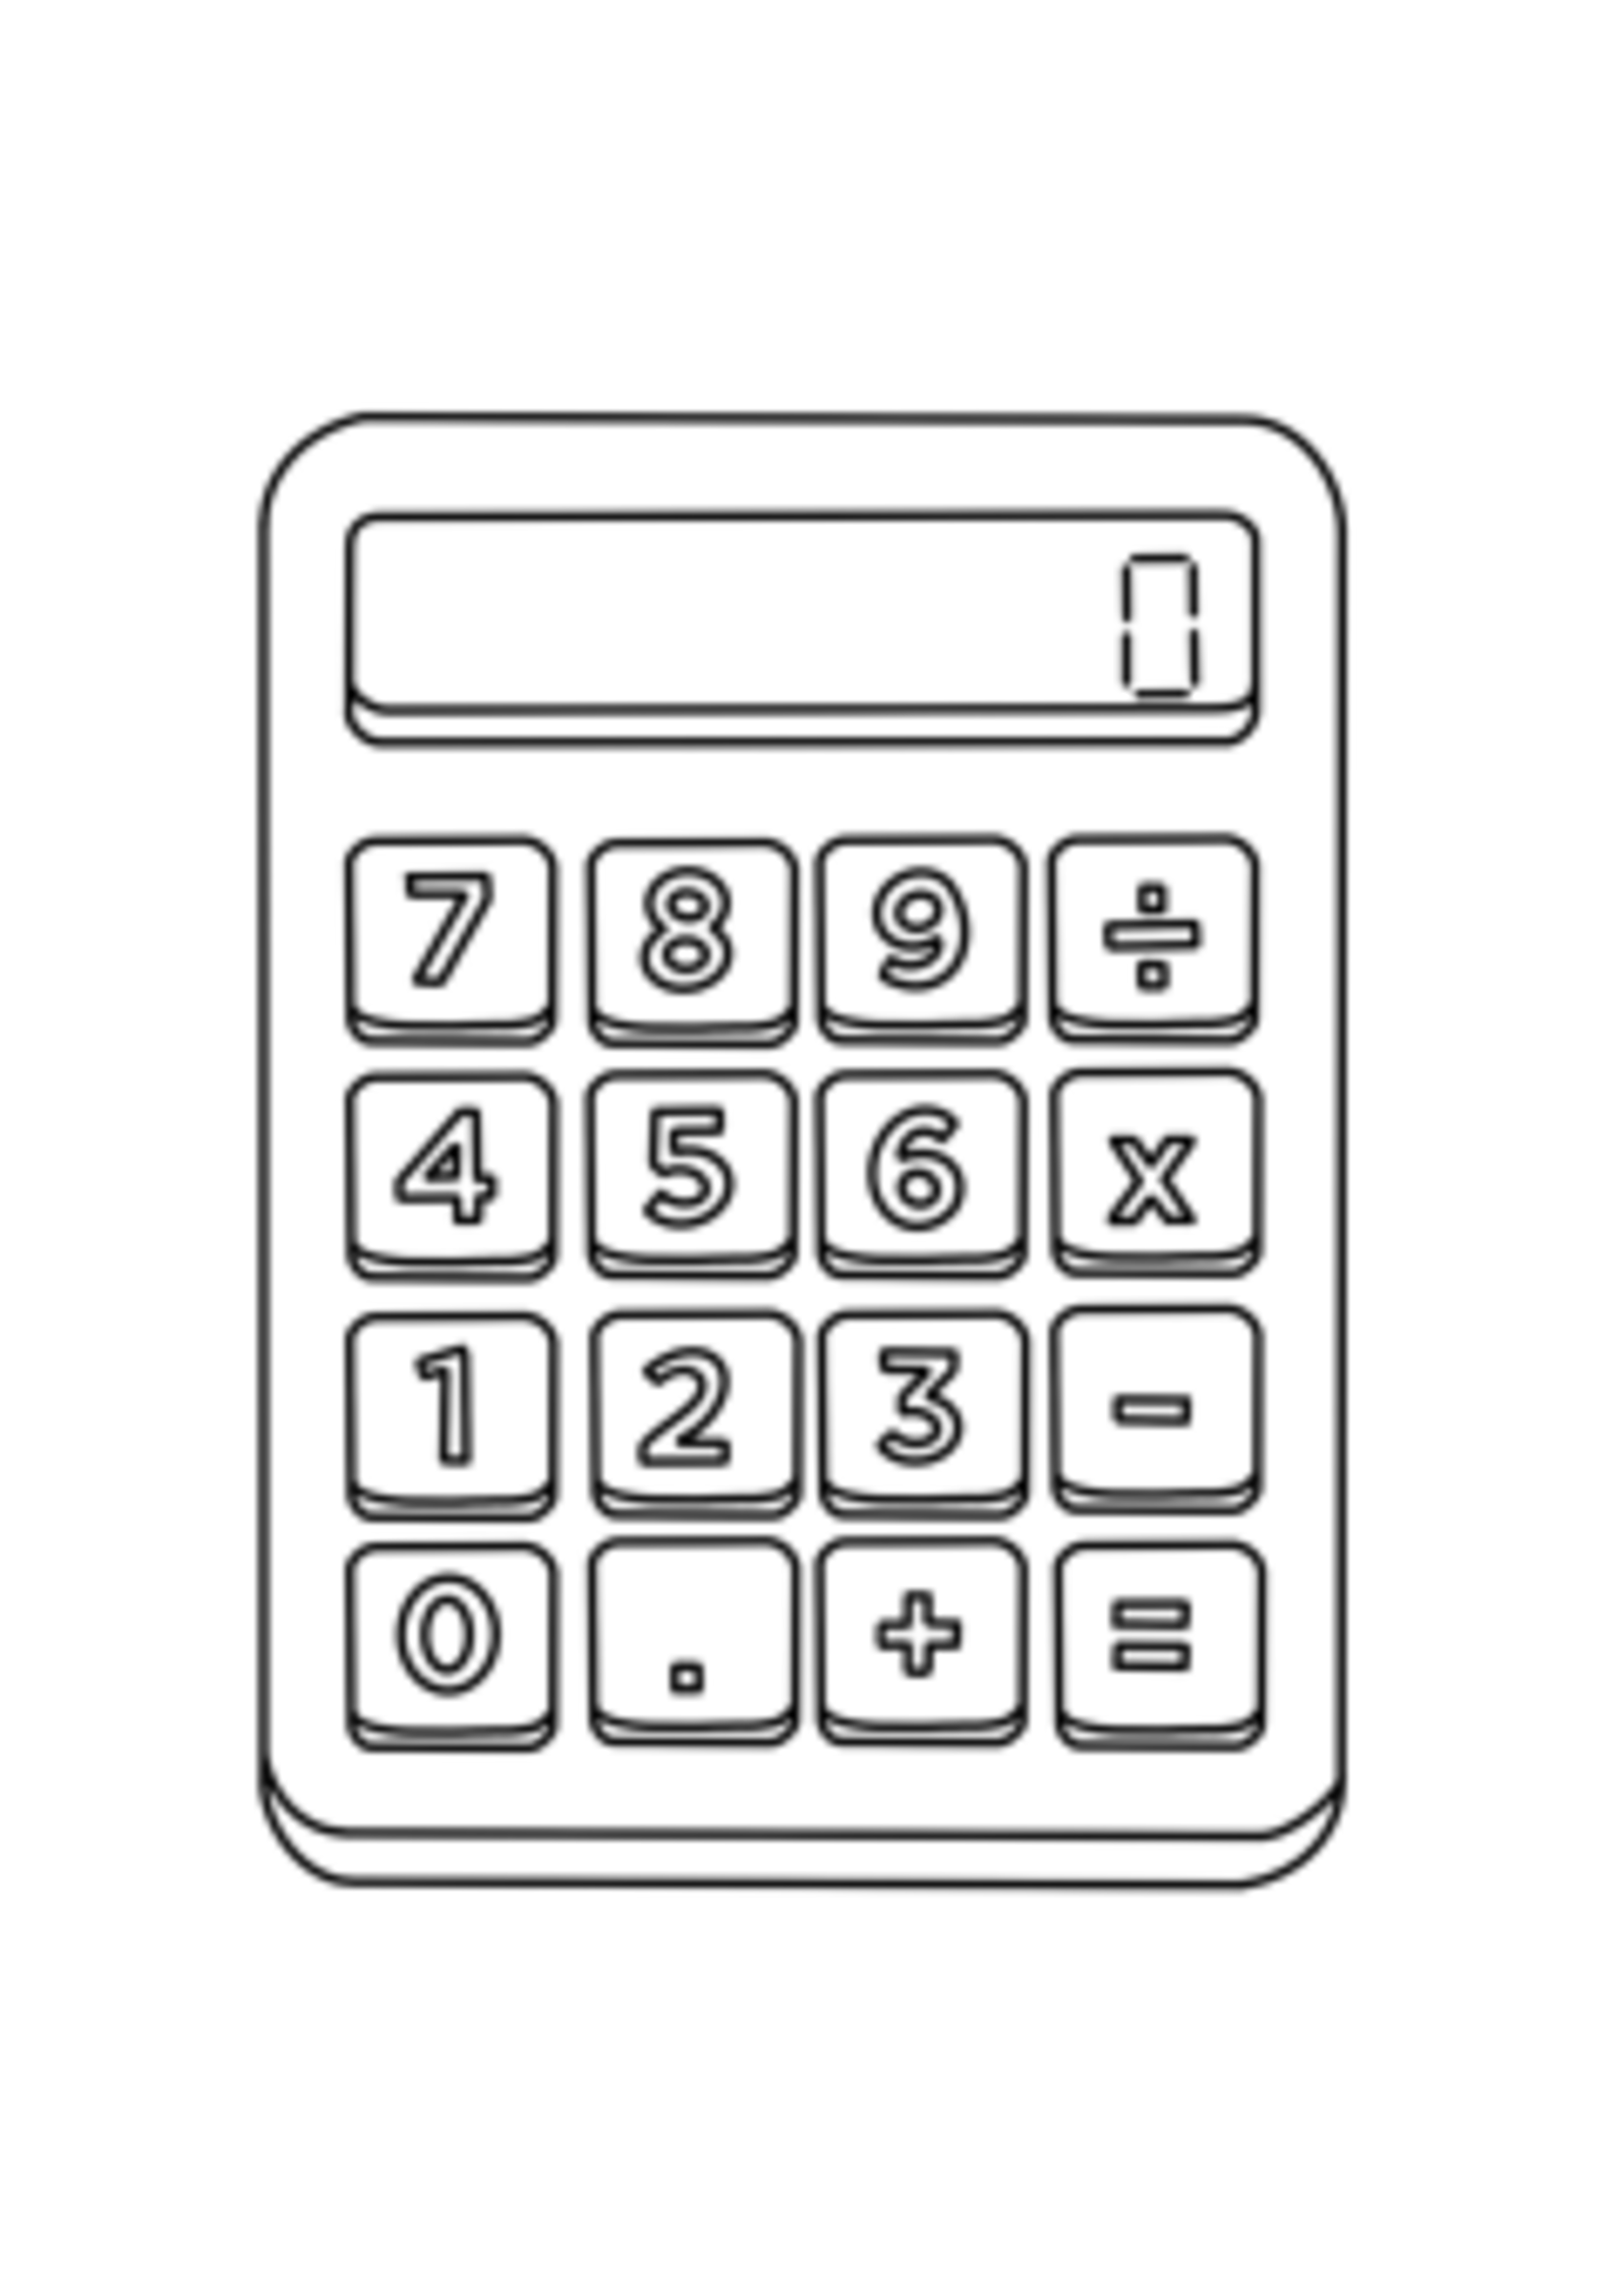 NON-UNIFORM CALCULATOR - Wrestling Kiosk Calculator